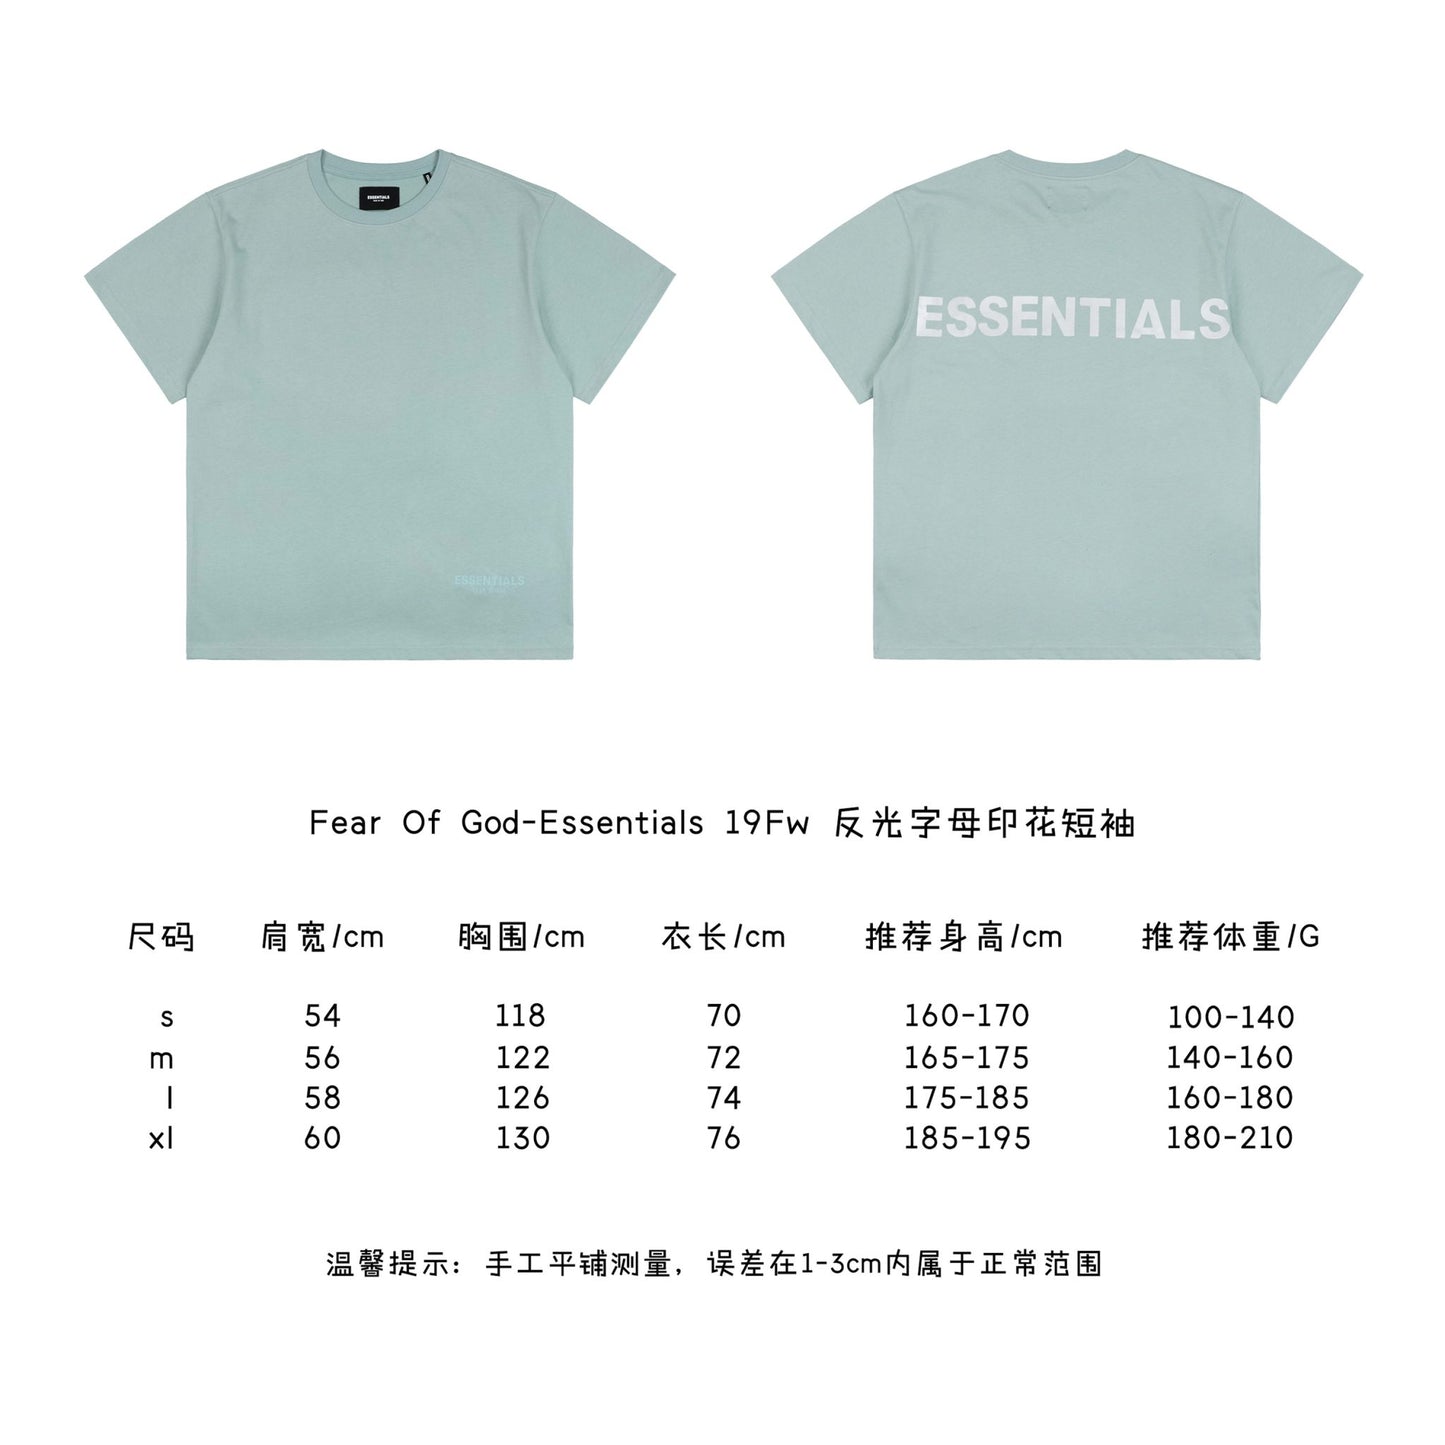 FOG Turquoise E55ential5 T-Shirt